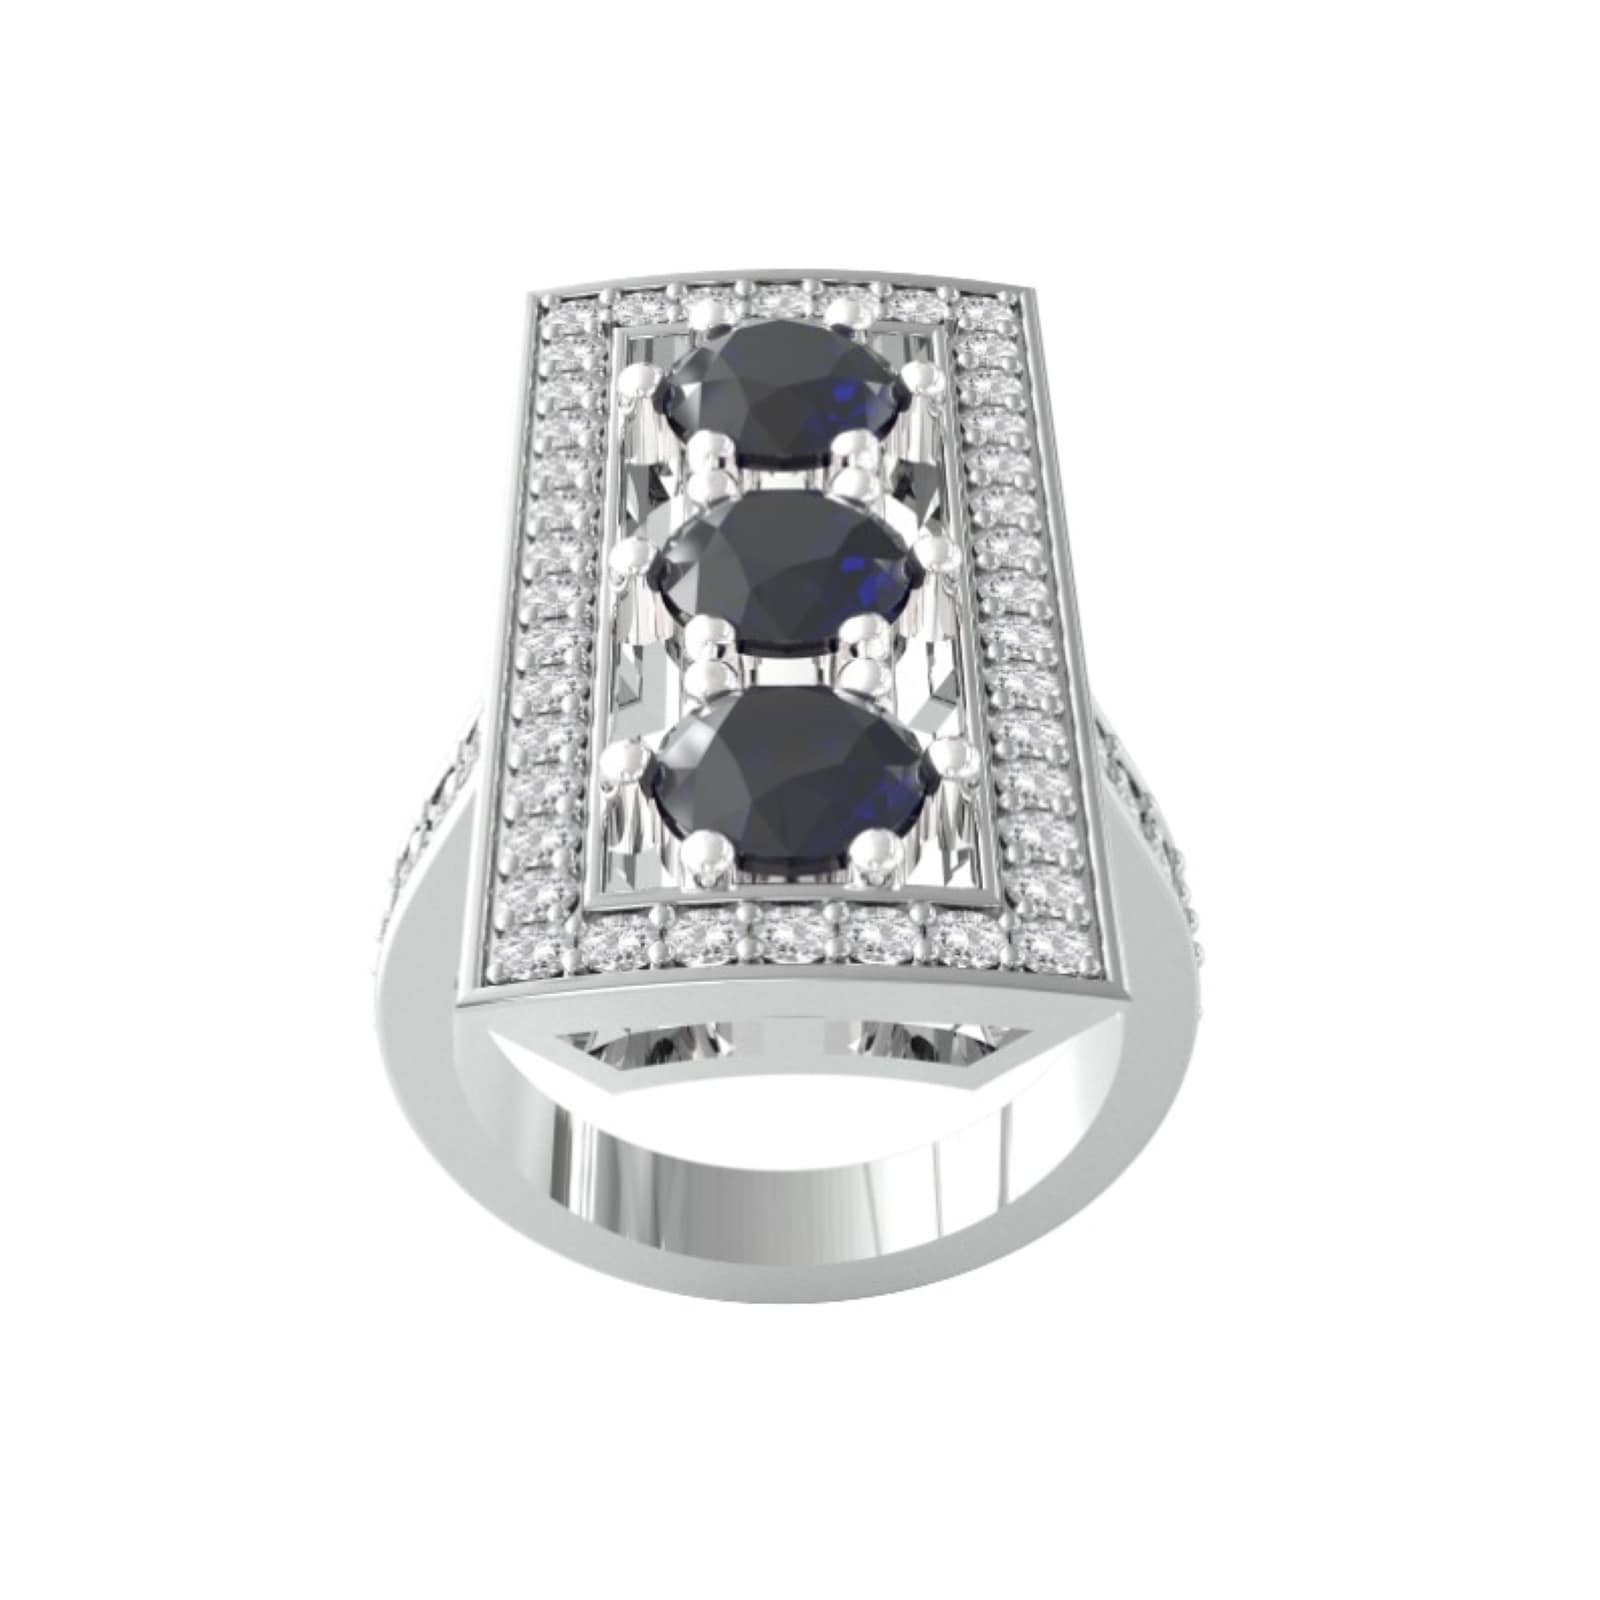 18ct White Gold Art Deco Sapphire & Diamond Plaque Ring - Ring Size I.5